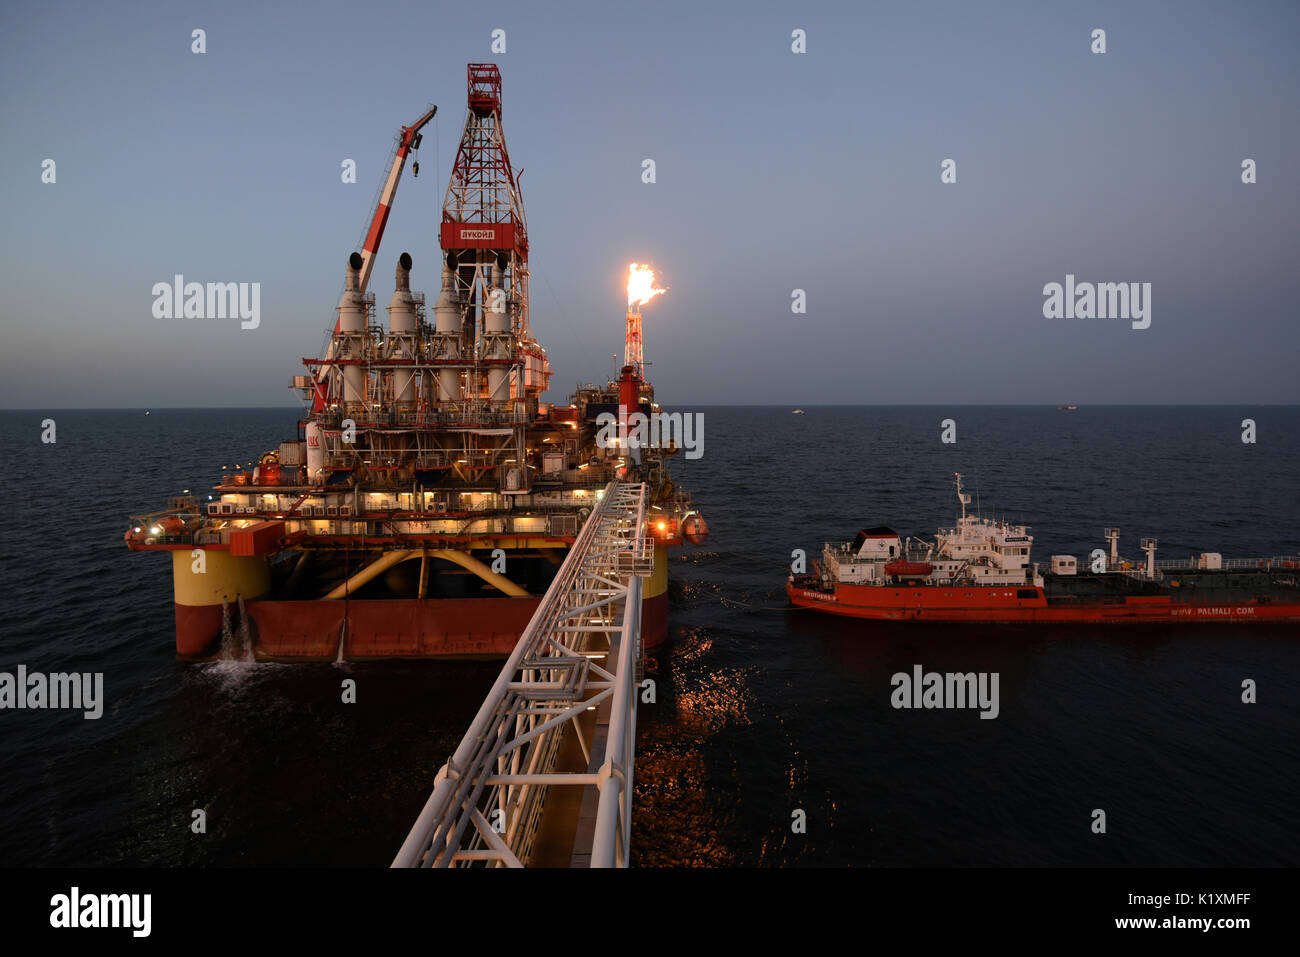 Oil rig platform on Lukoil Korchagina oil field at the north of Caspian Sea, Astrakhan region, Russia Stock Photo